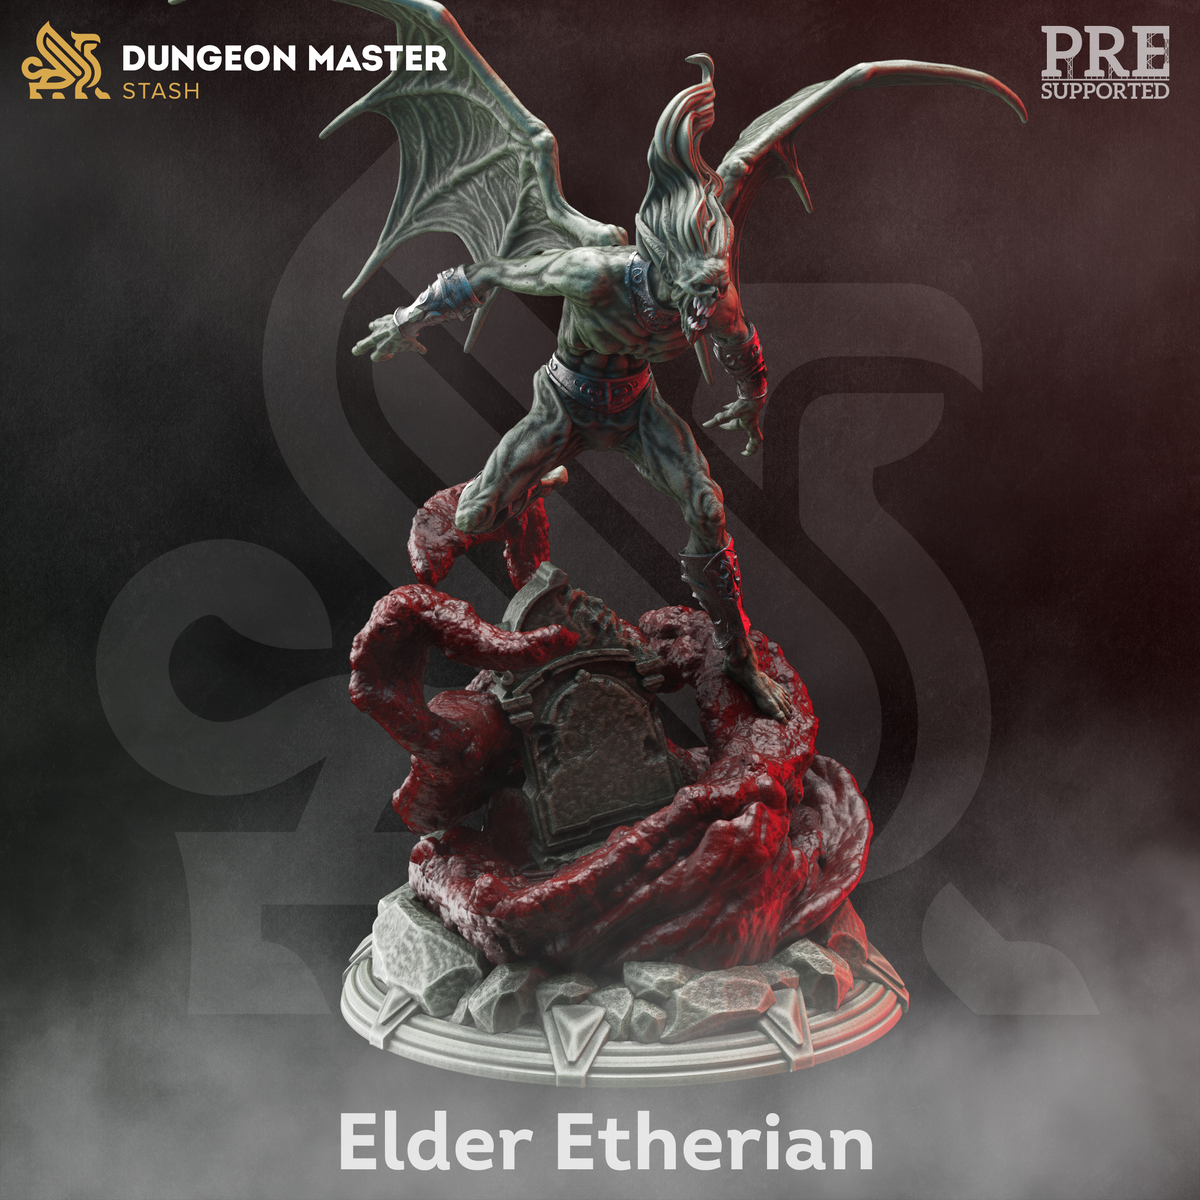 Elder Etherian